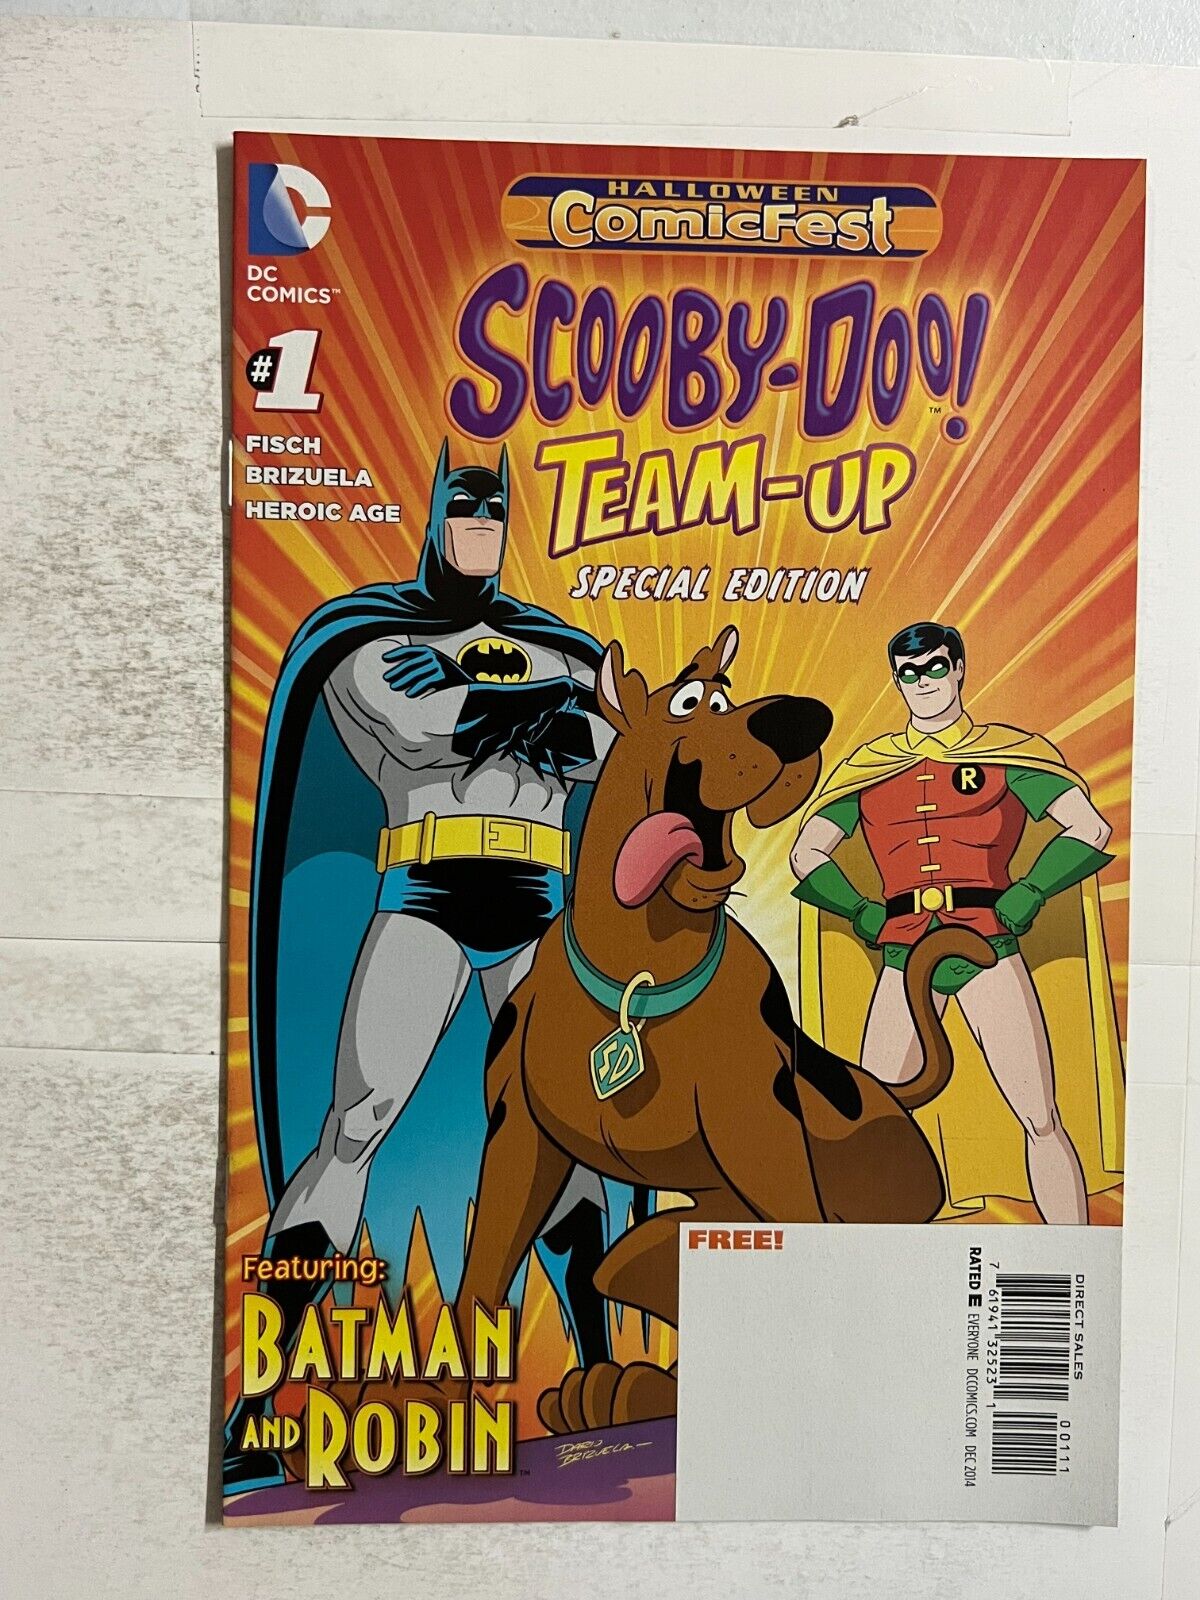 SCOOBY-DOO TEAM-UP #1 Halloween ComicFest Edition 2014 DC Comics | Combined Ship